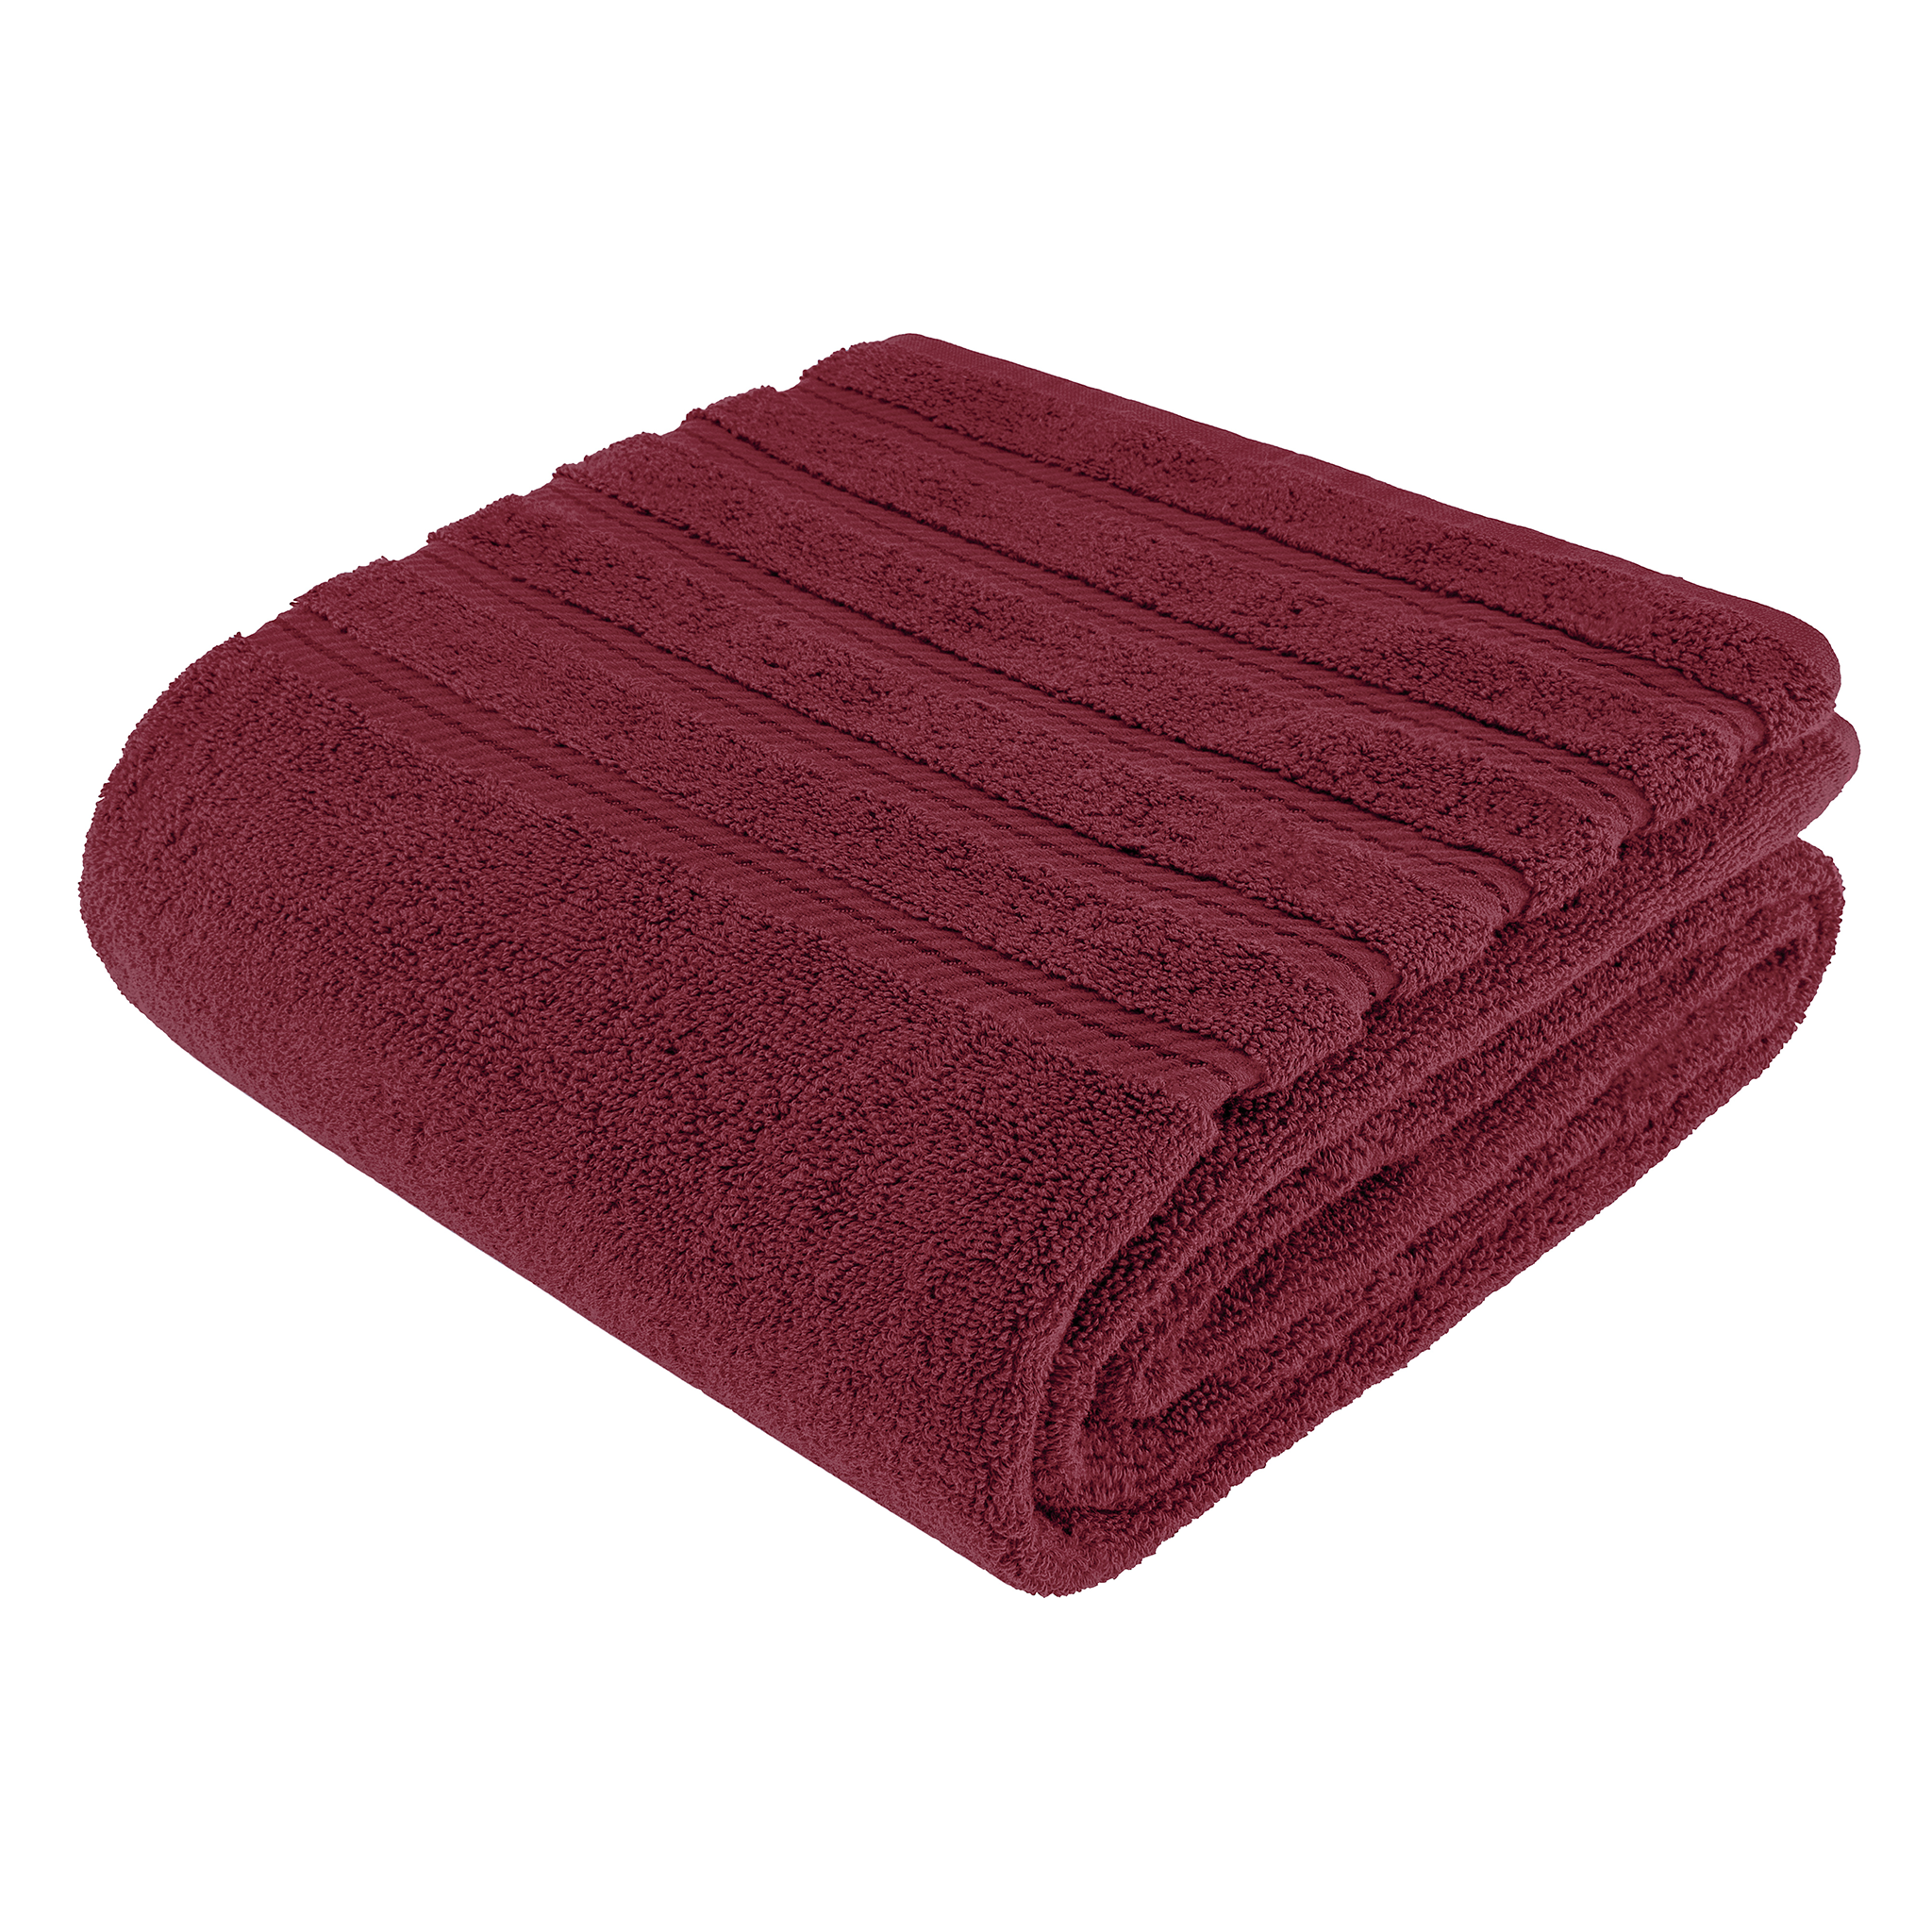 American Soft Linen - 35x70 Jumbo Bath Sheet Turkish Bath Towel - 16 Piece Case Pack - Bordeaux-Red - 7